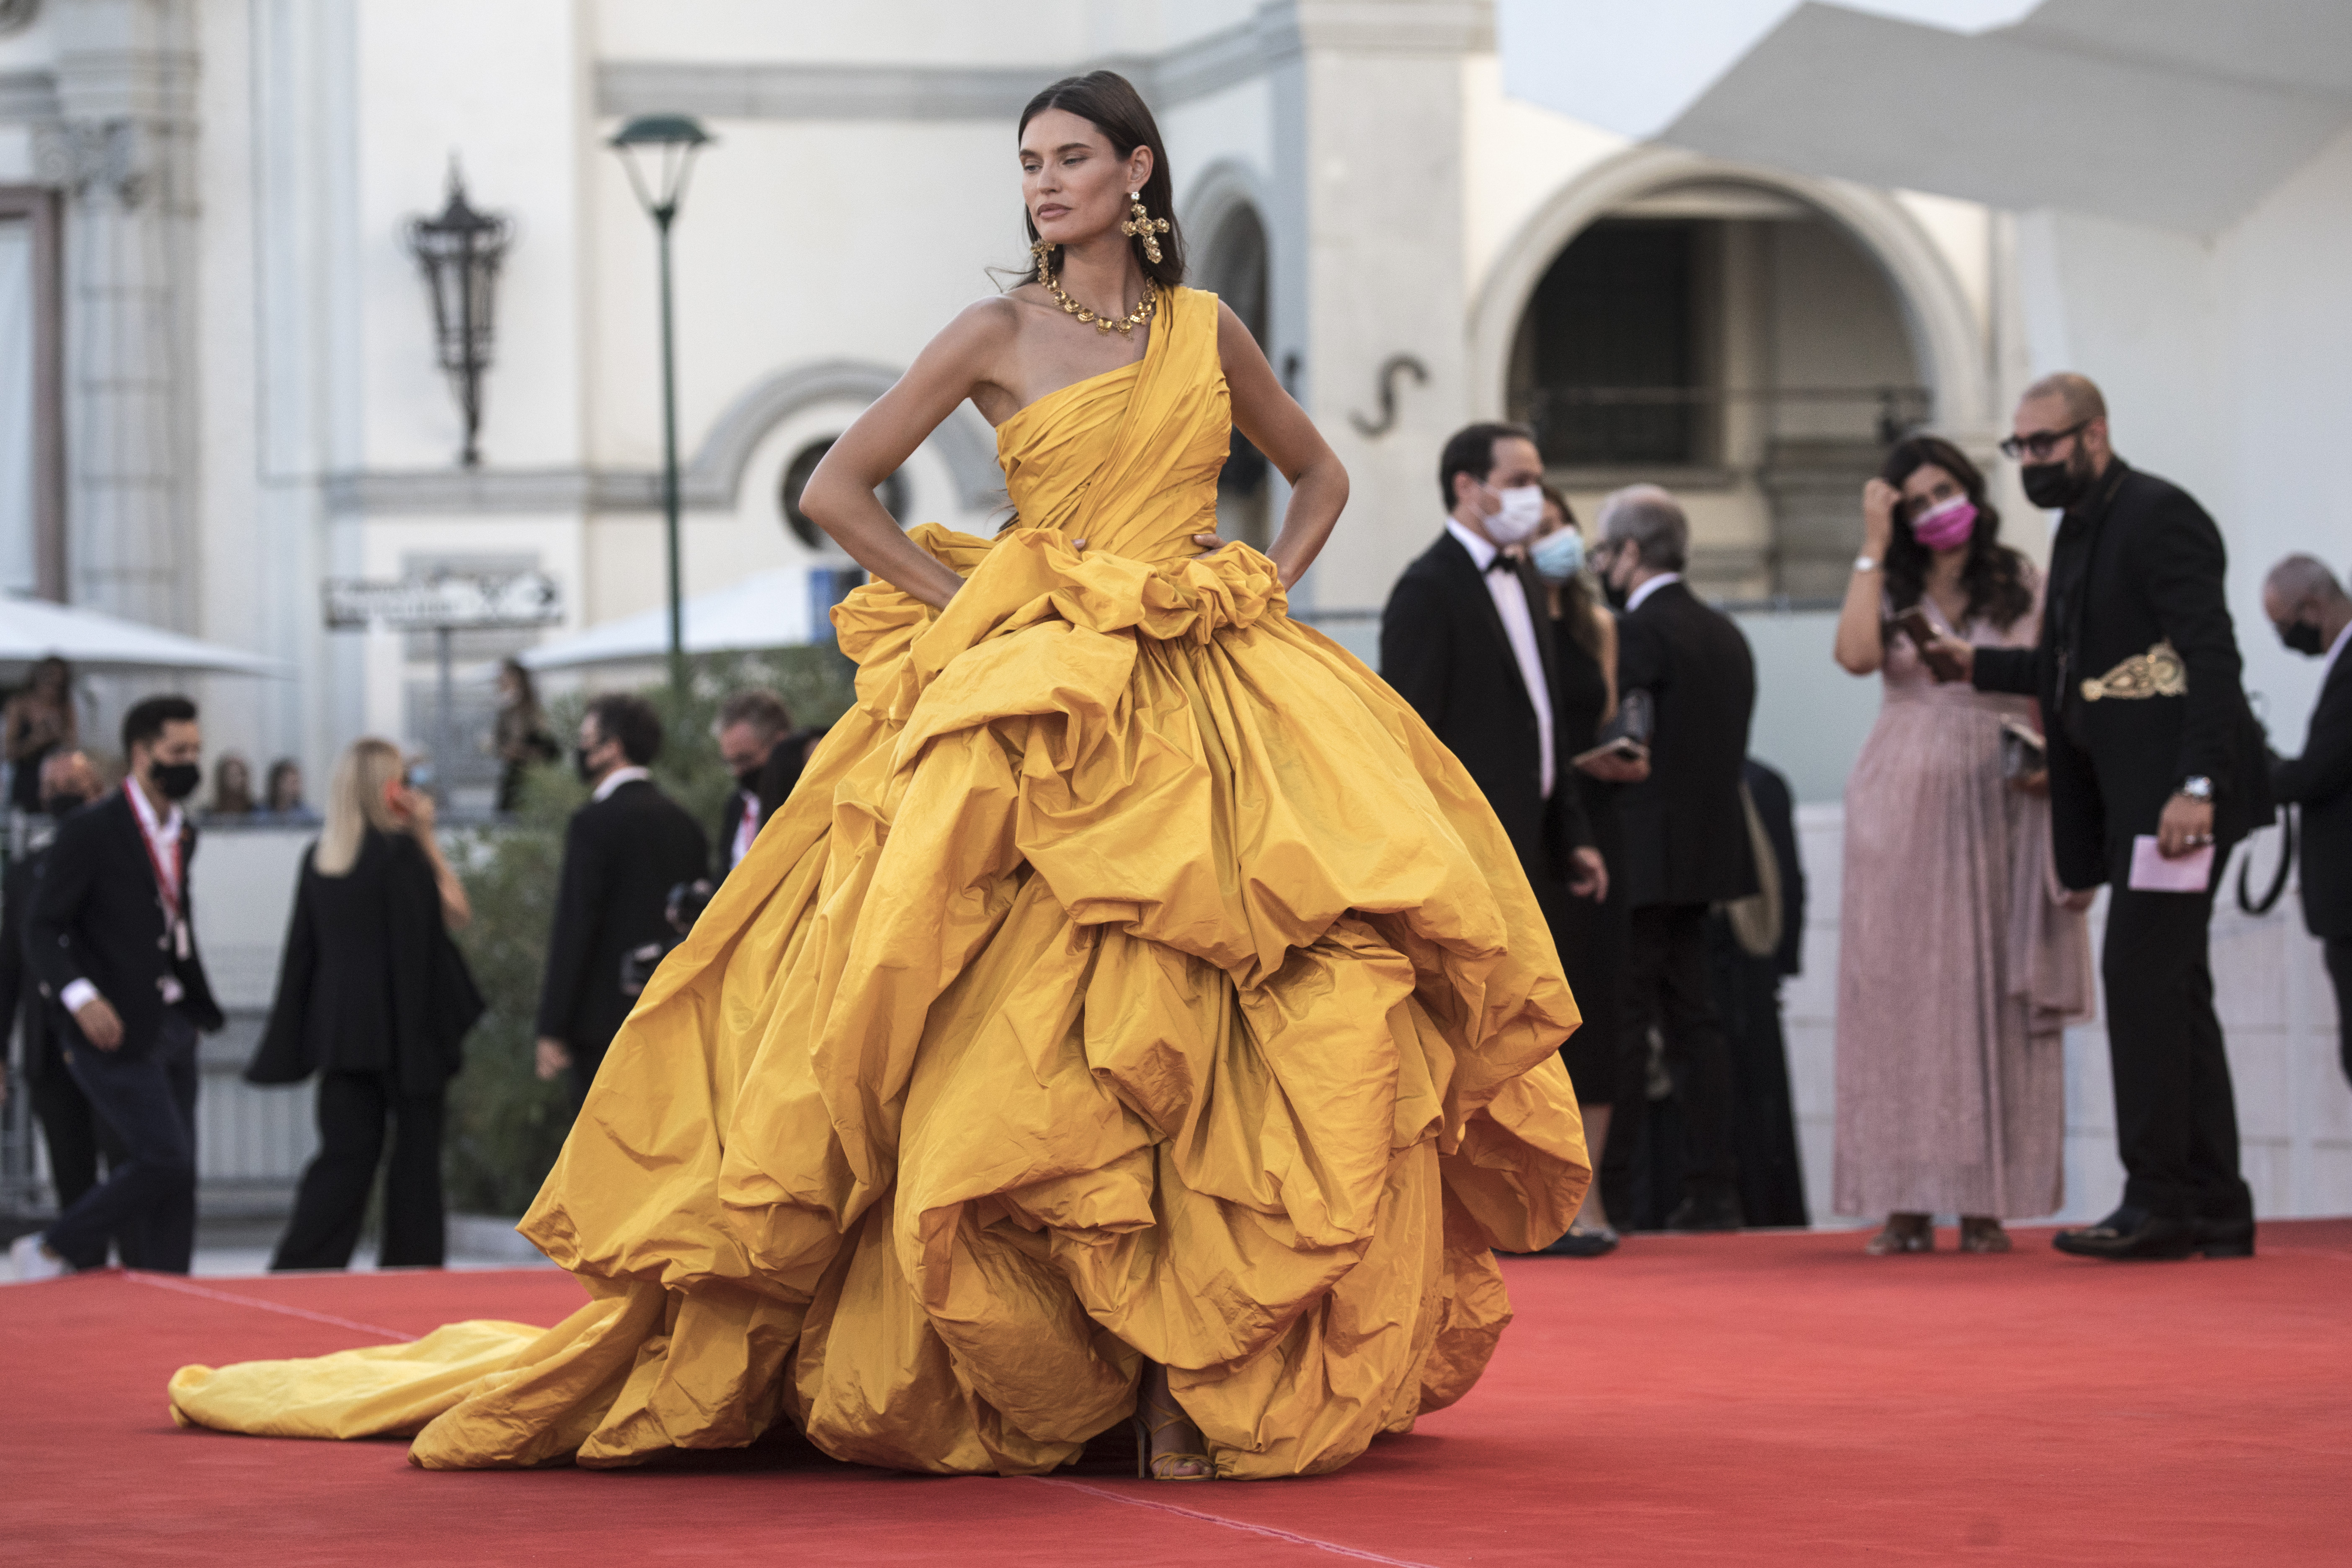 Venice Film Festival red carpet: The best celebrity fashion on